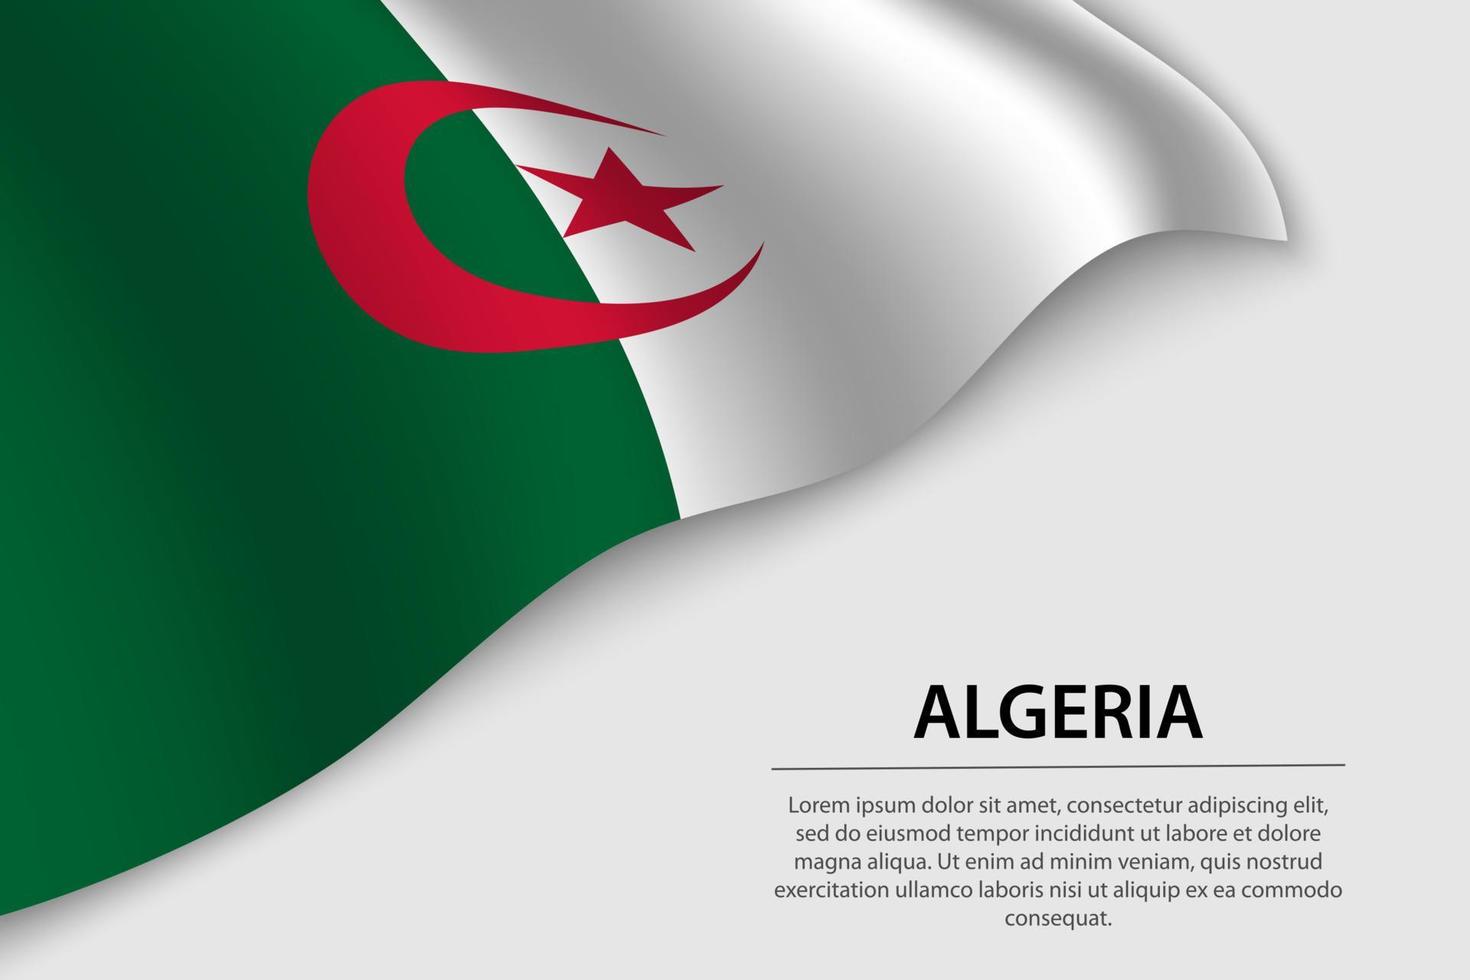 ola bandera de Argelia en blanco antecedentes. bandera o cinta vecto vector